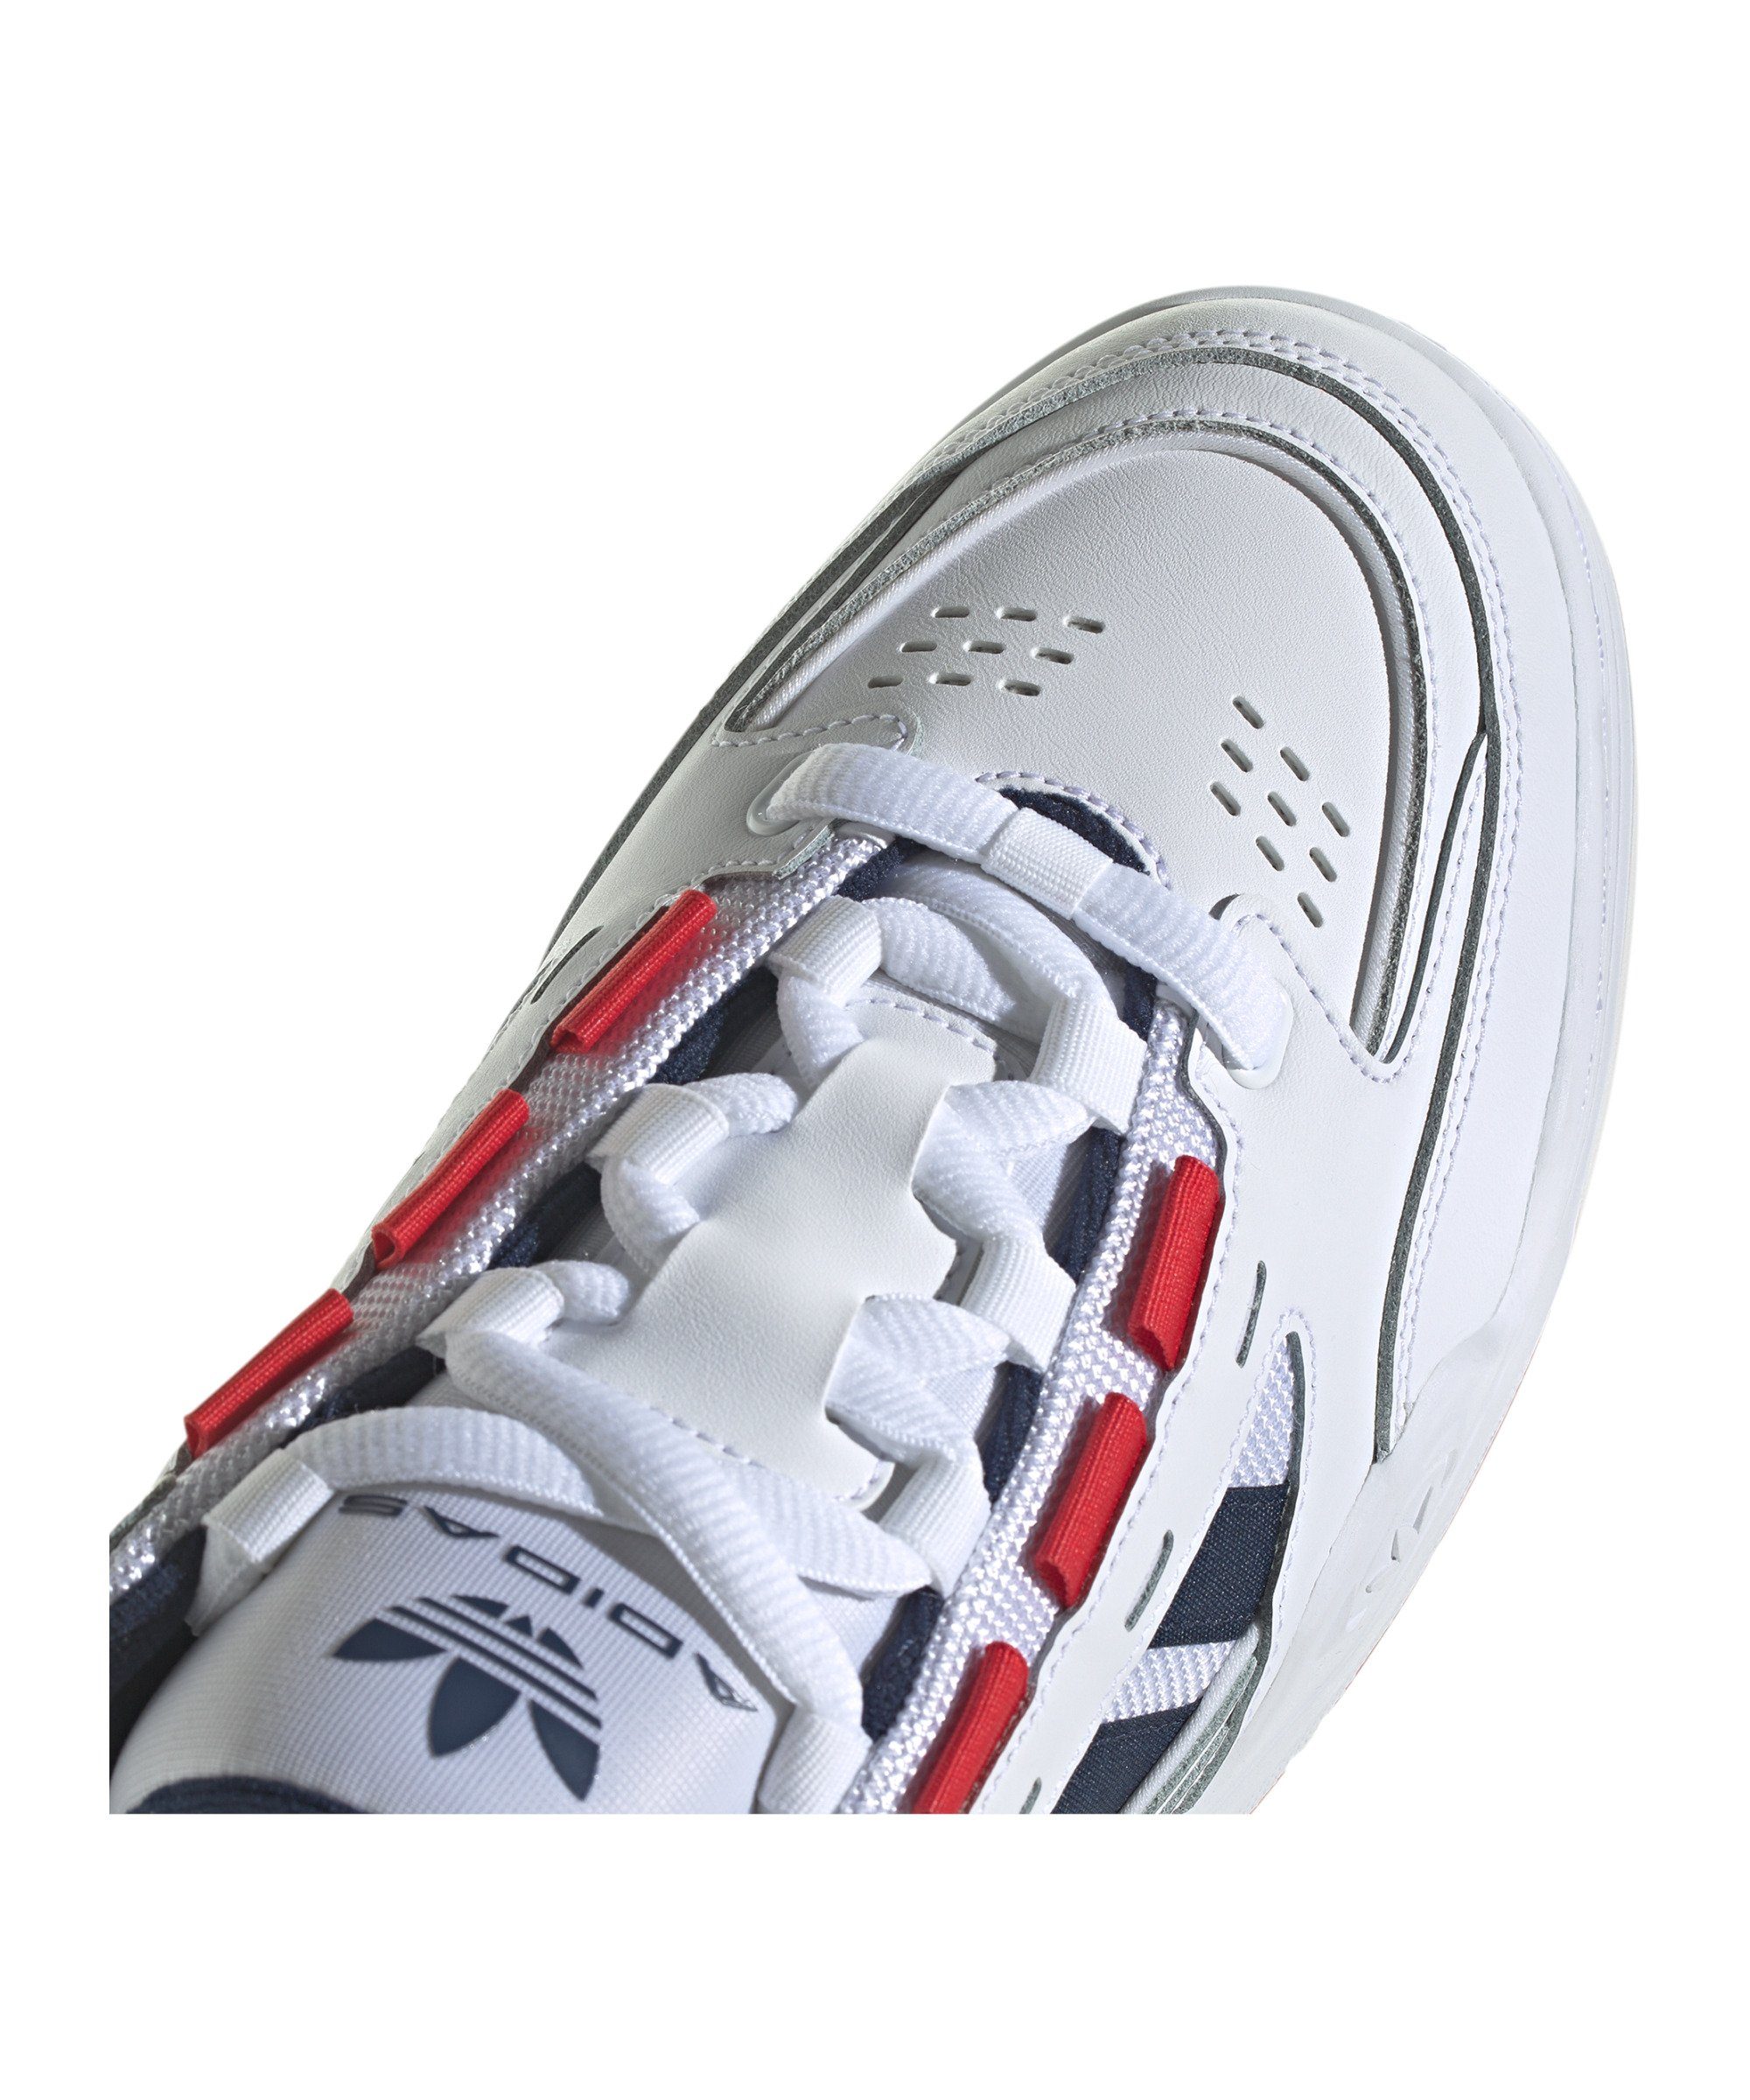 adidas Originals Adi2000 weissblaurot Sneaker